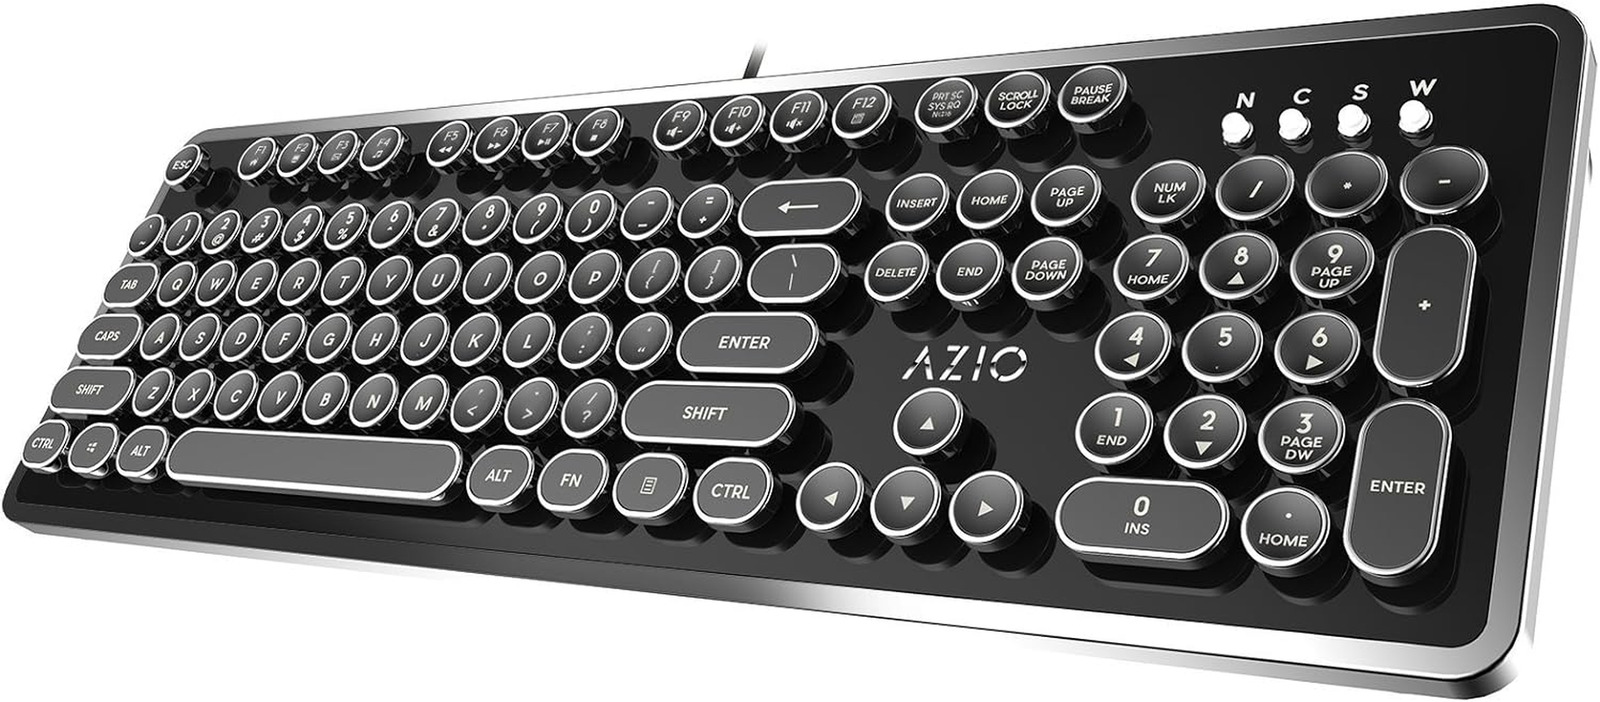 Retro Typewriter-Inspired Mechanical Keyboard Vintage Design W/Modern Features, 